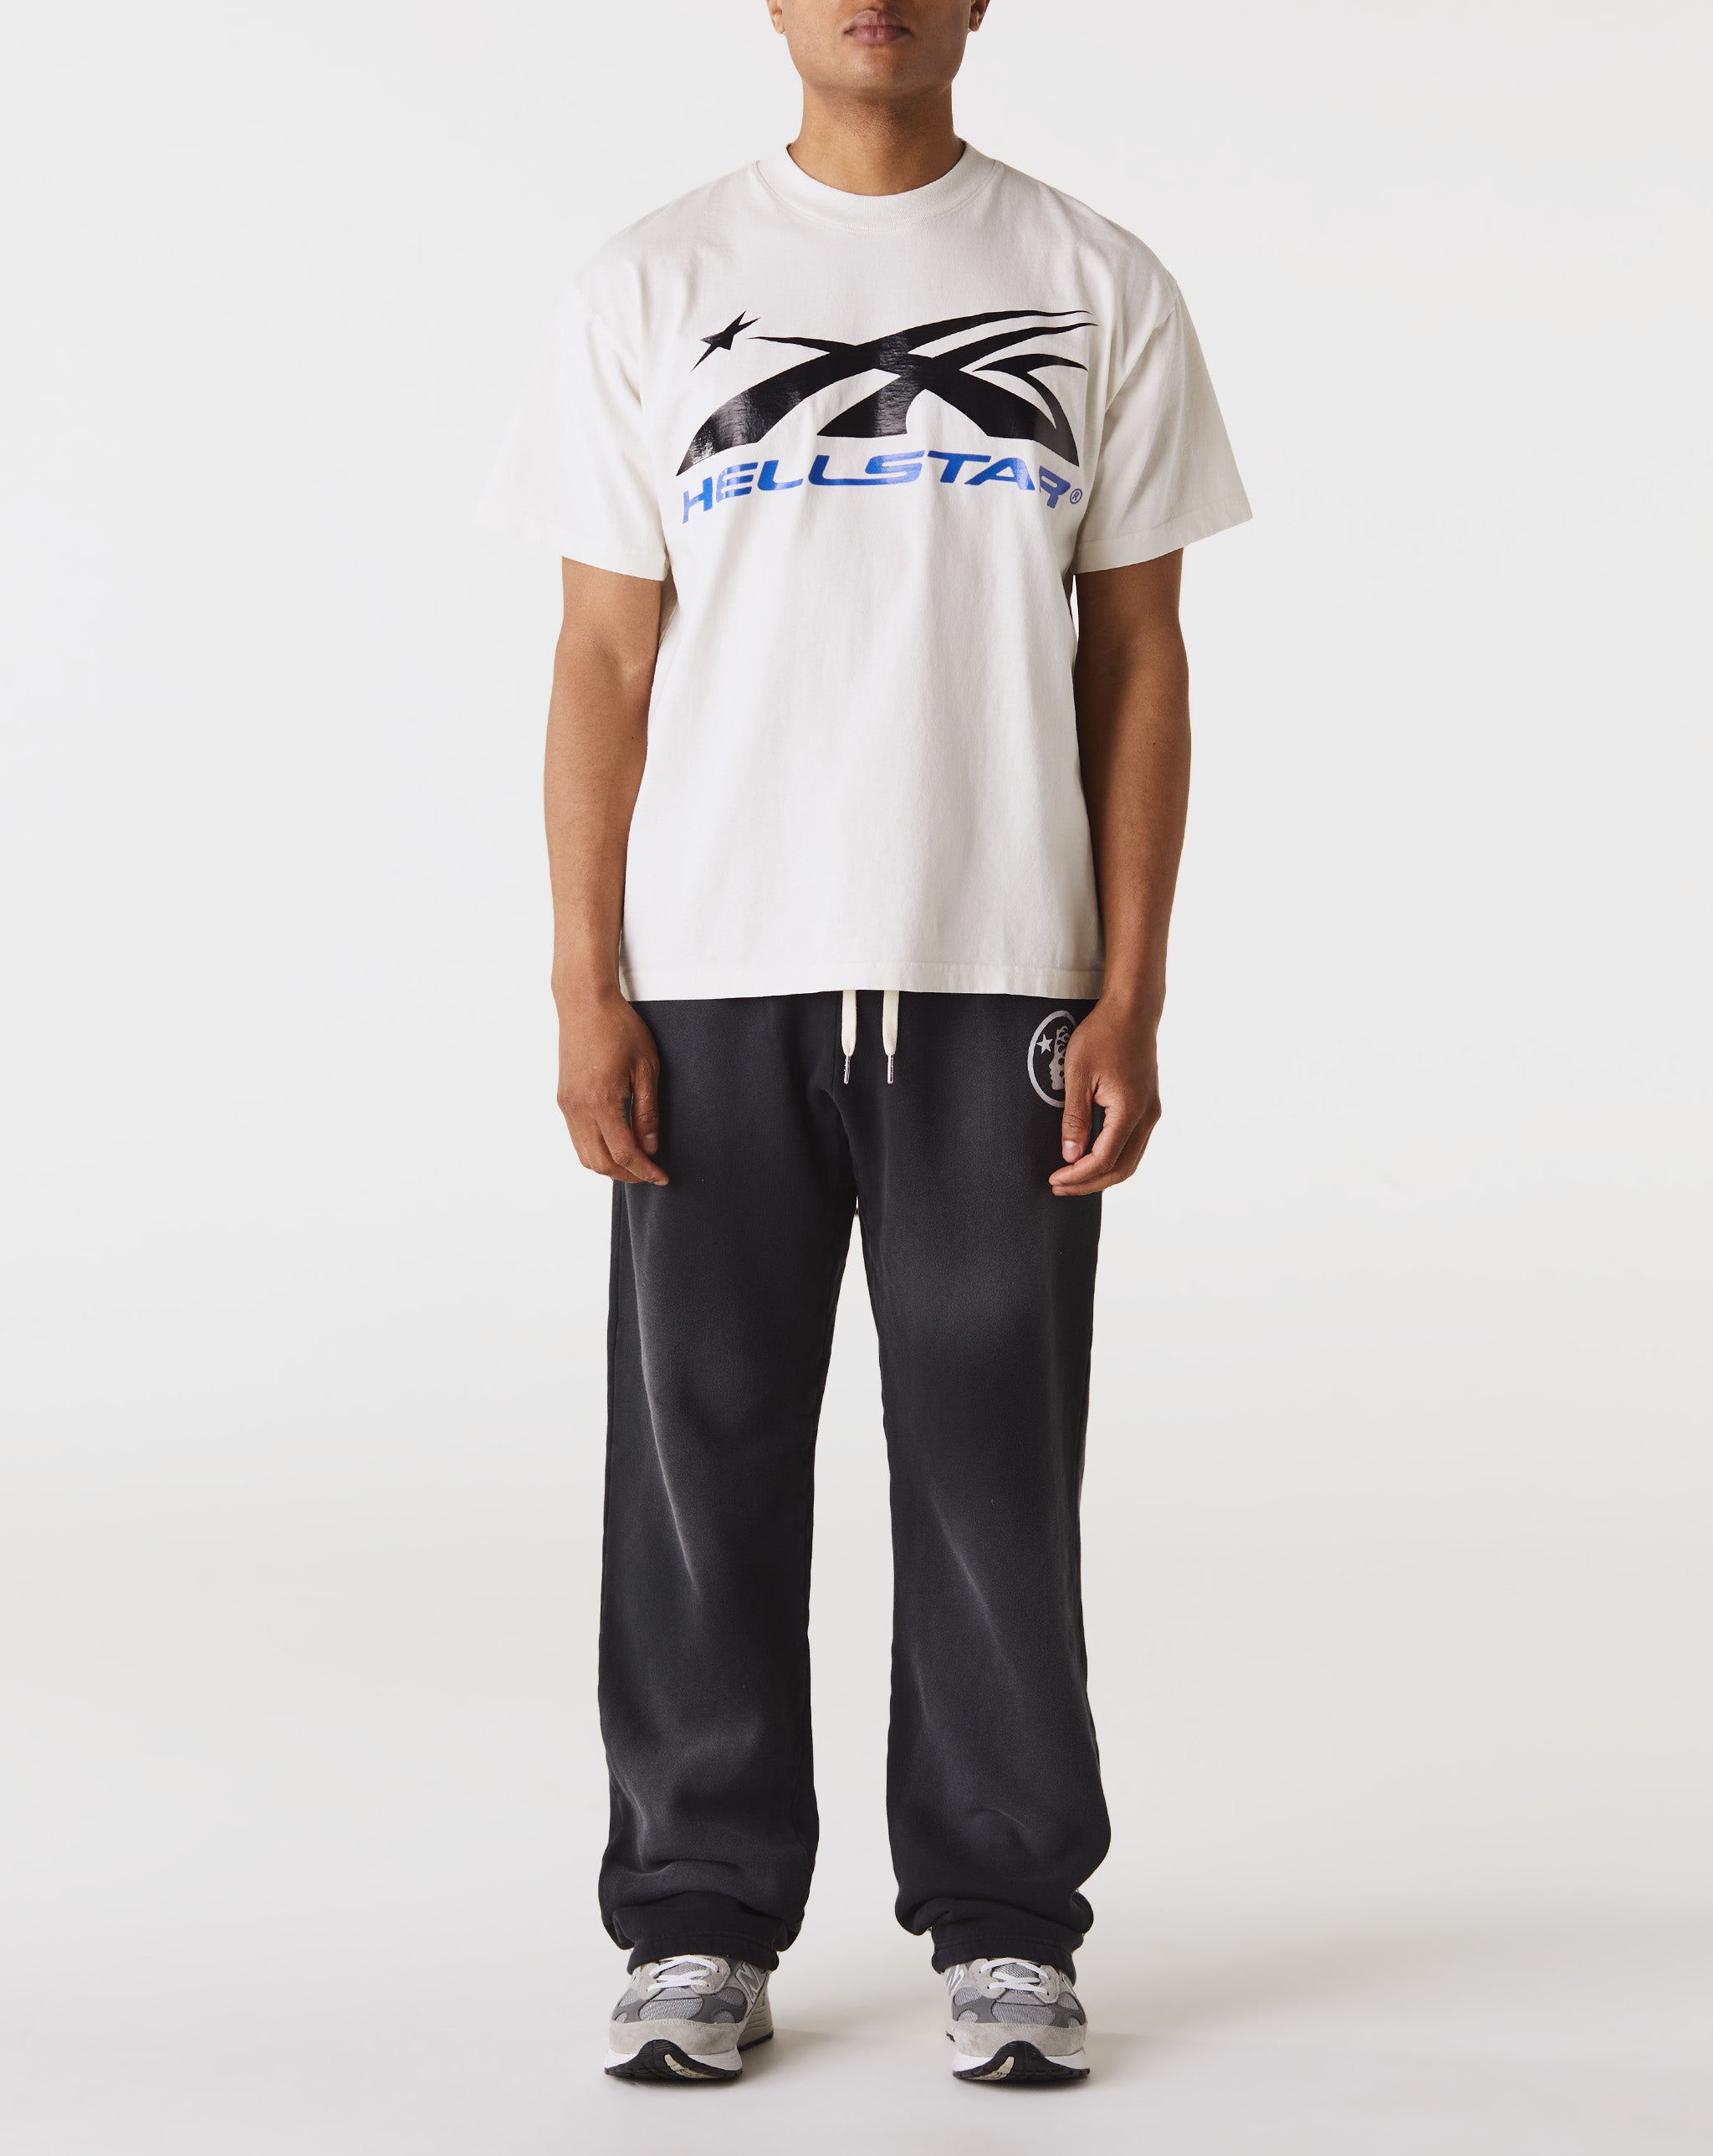 Hellstar Nike Sportswear Pack Alumni Short  - Cheap Erlebniswelt-fliegenfischen Jordan outlet